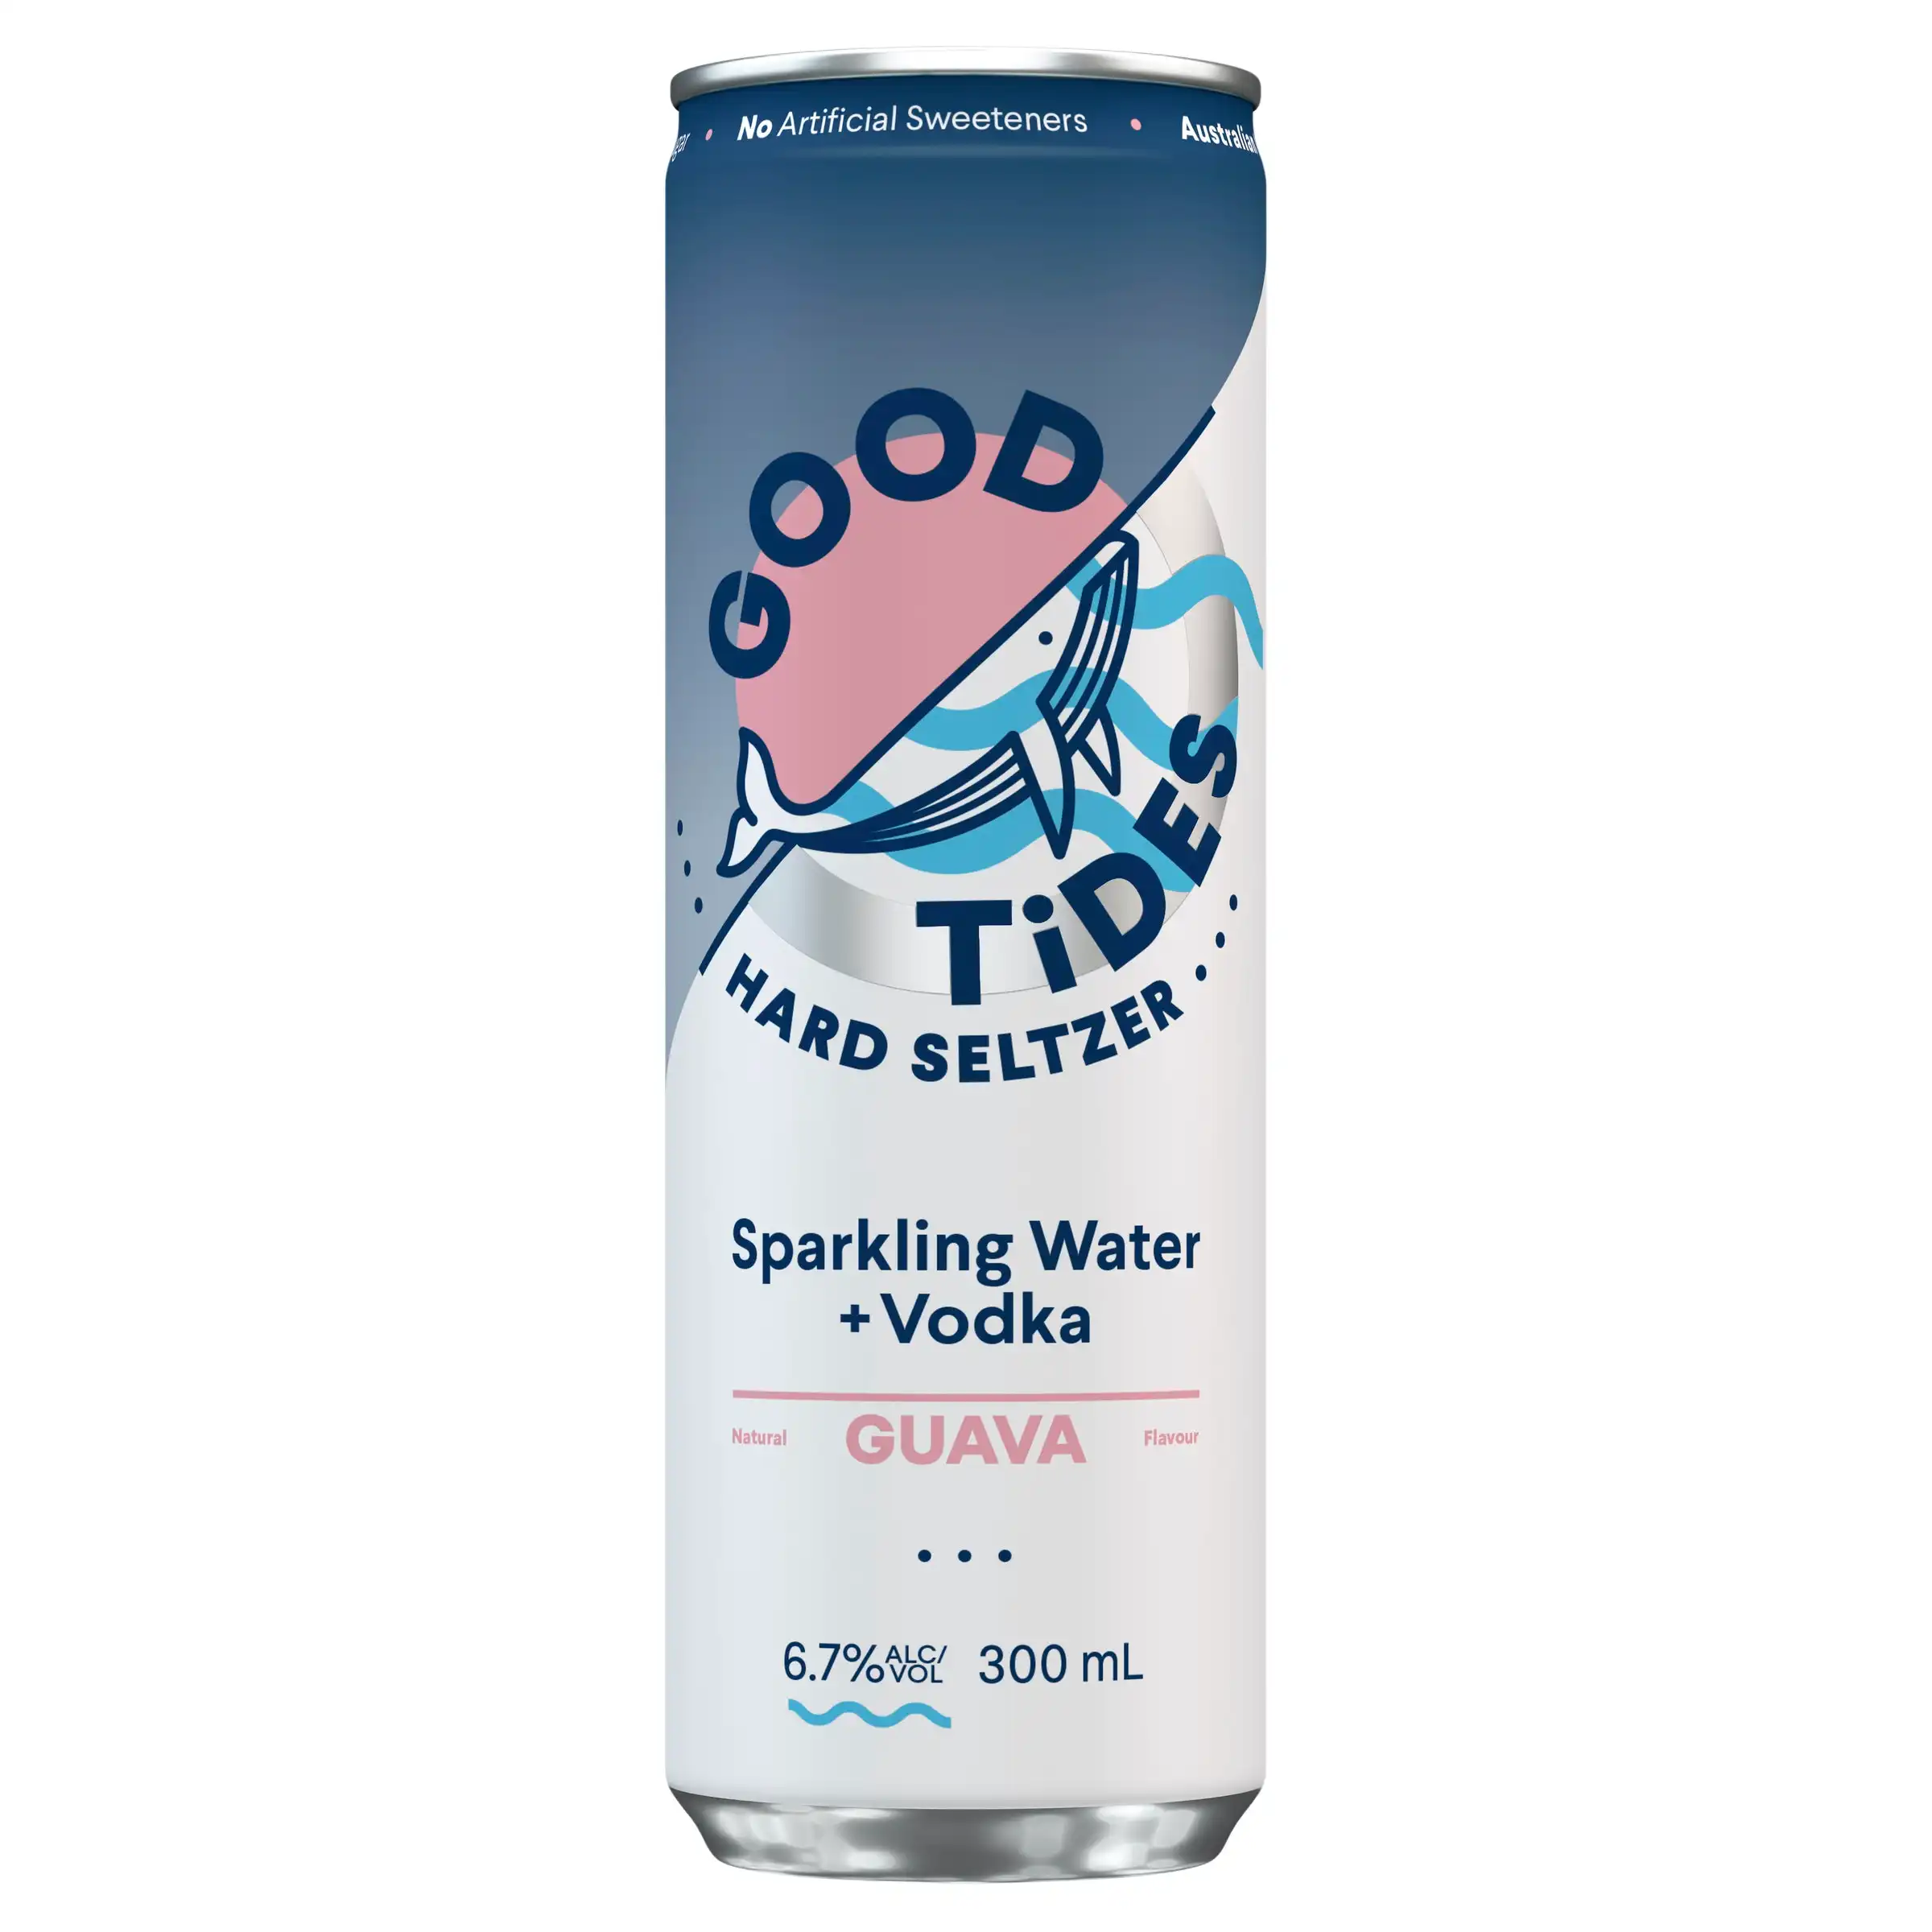 Good Tides Hard Seltzer Guava 6.7% Cans 24 x 300mL